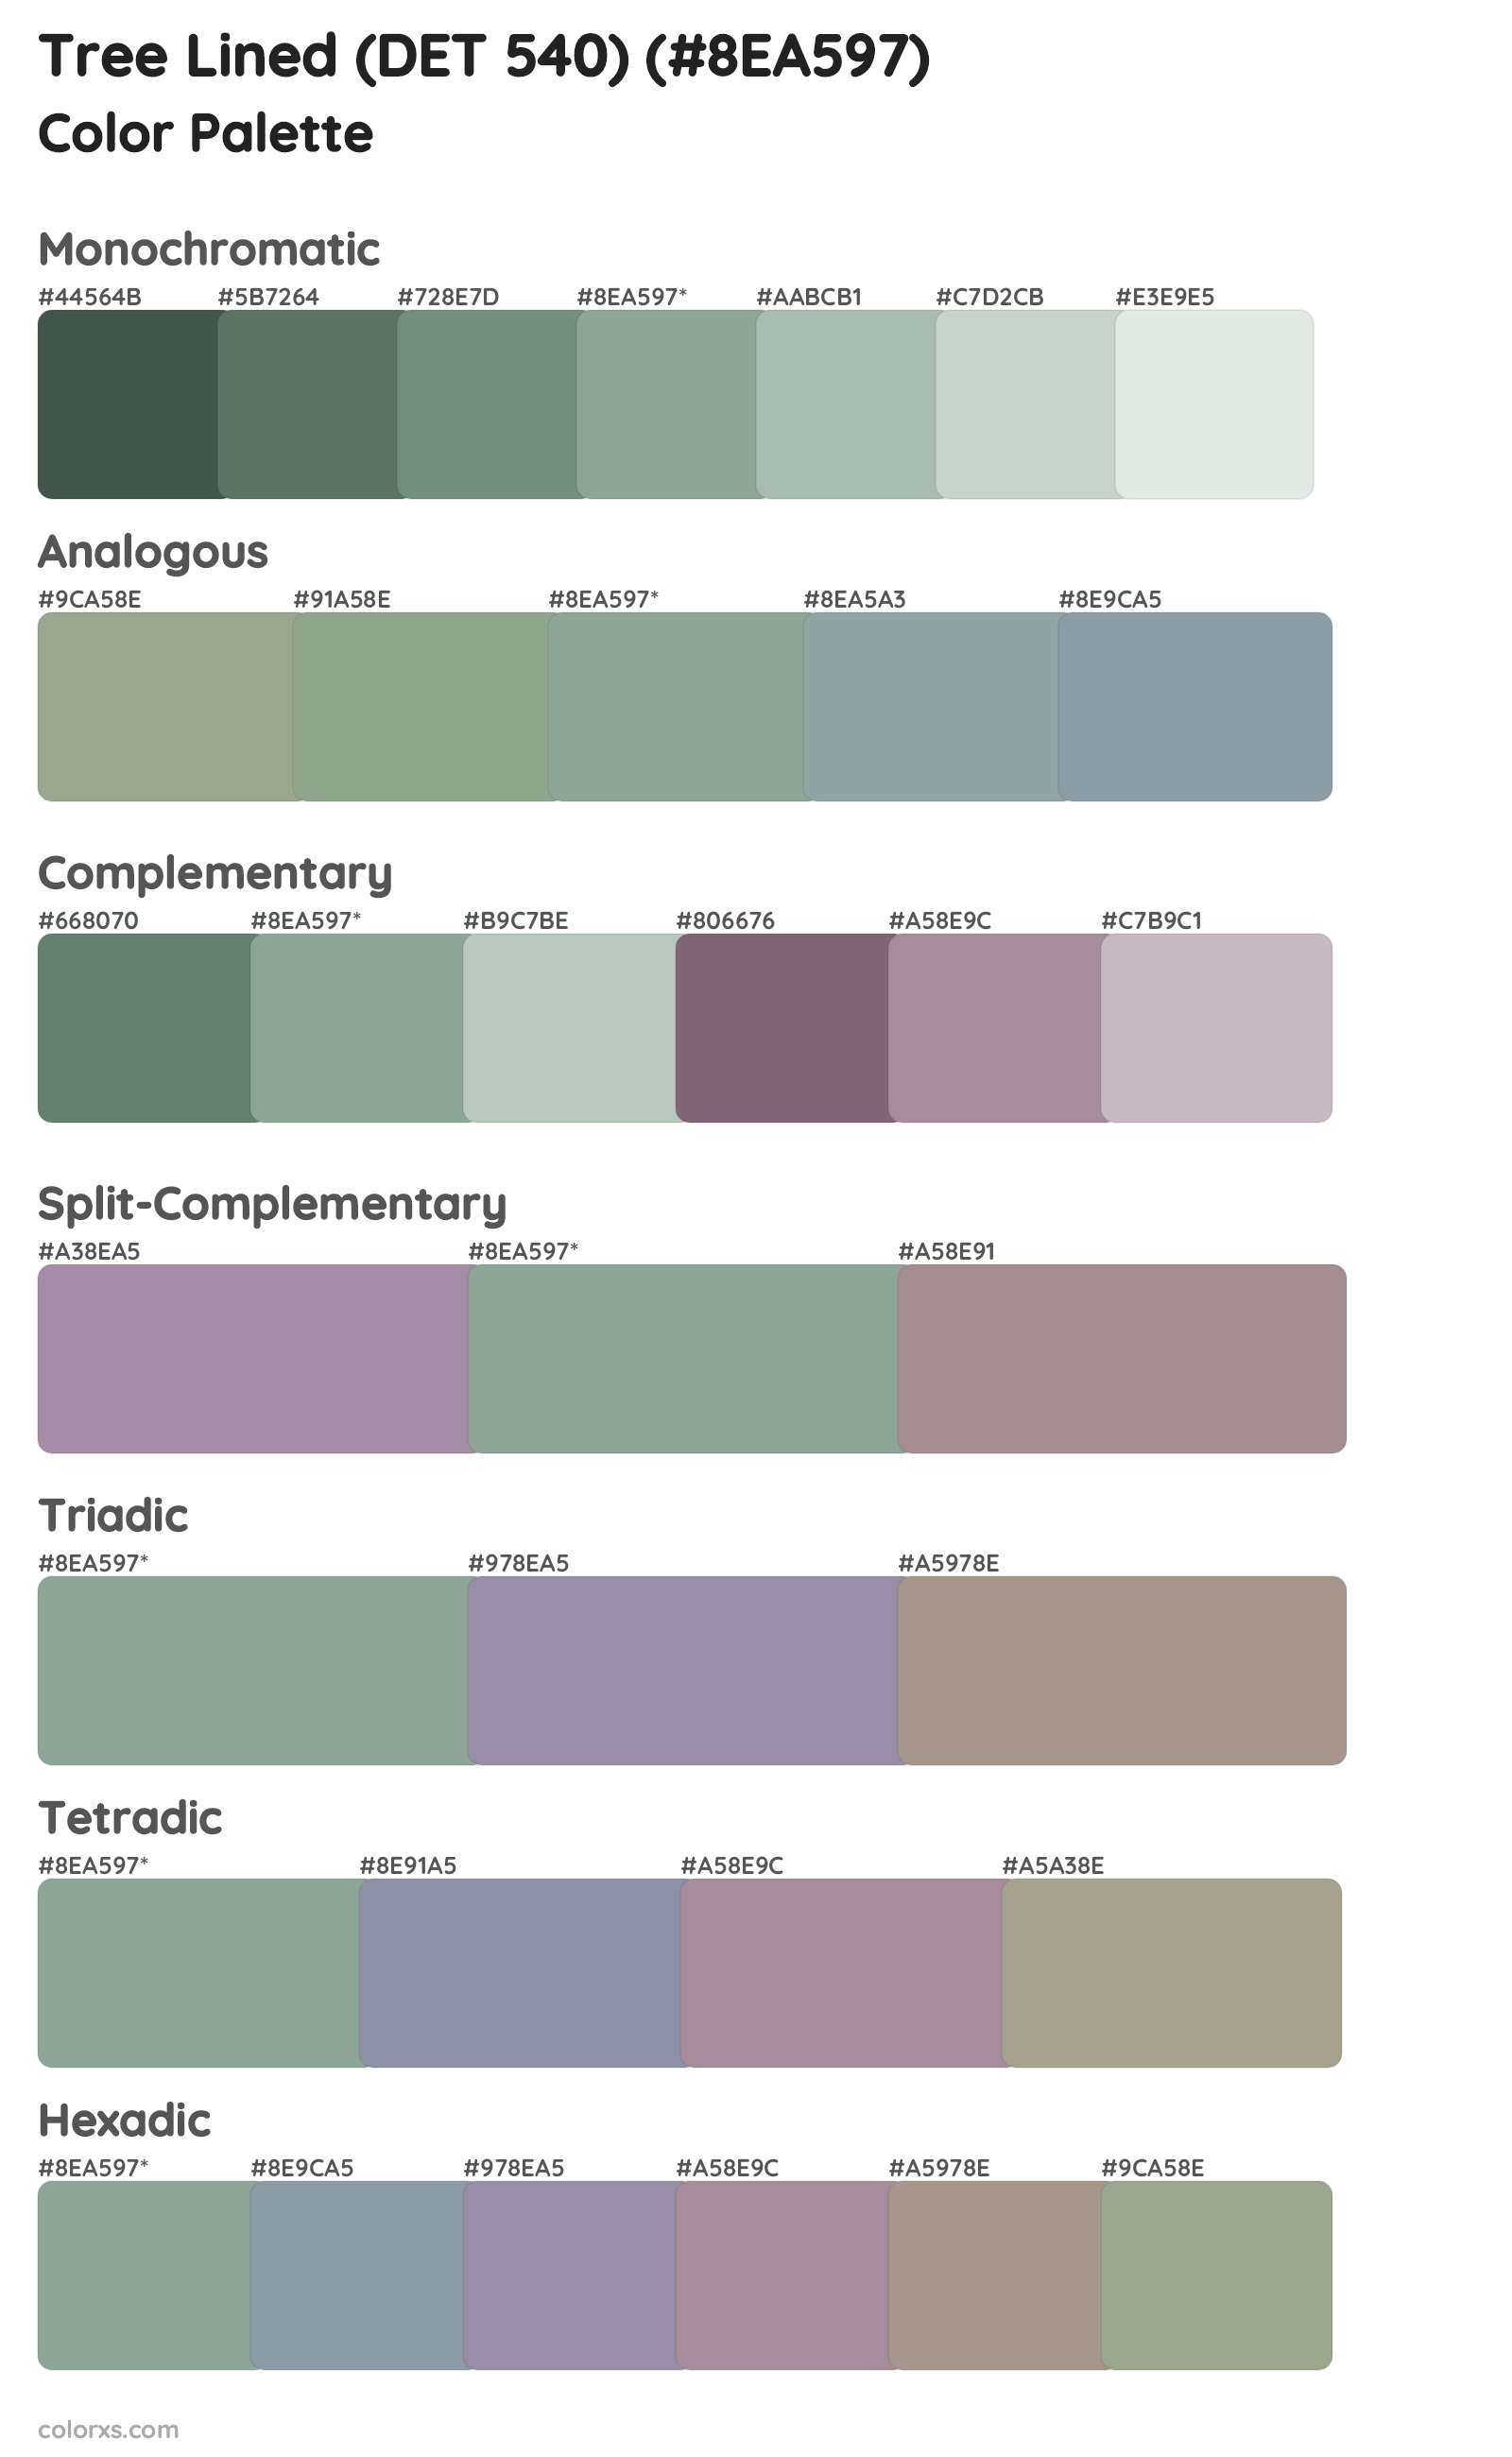 Tree Lined (DET 540) Color Scheme Palettes